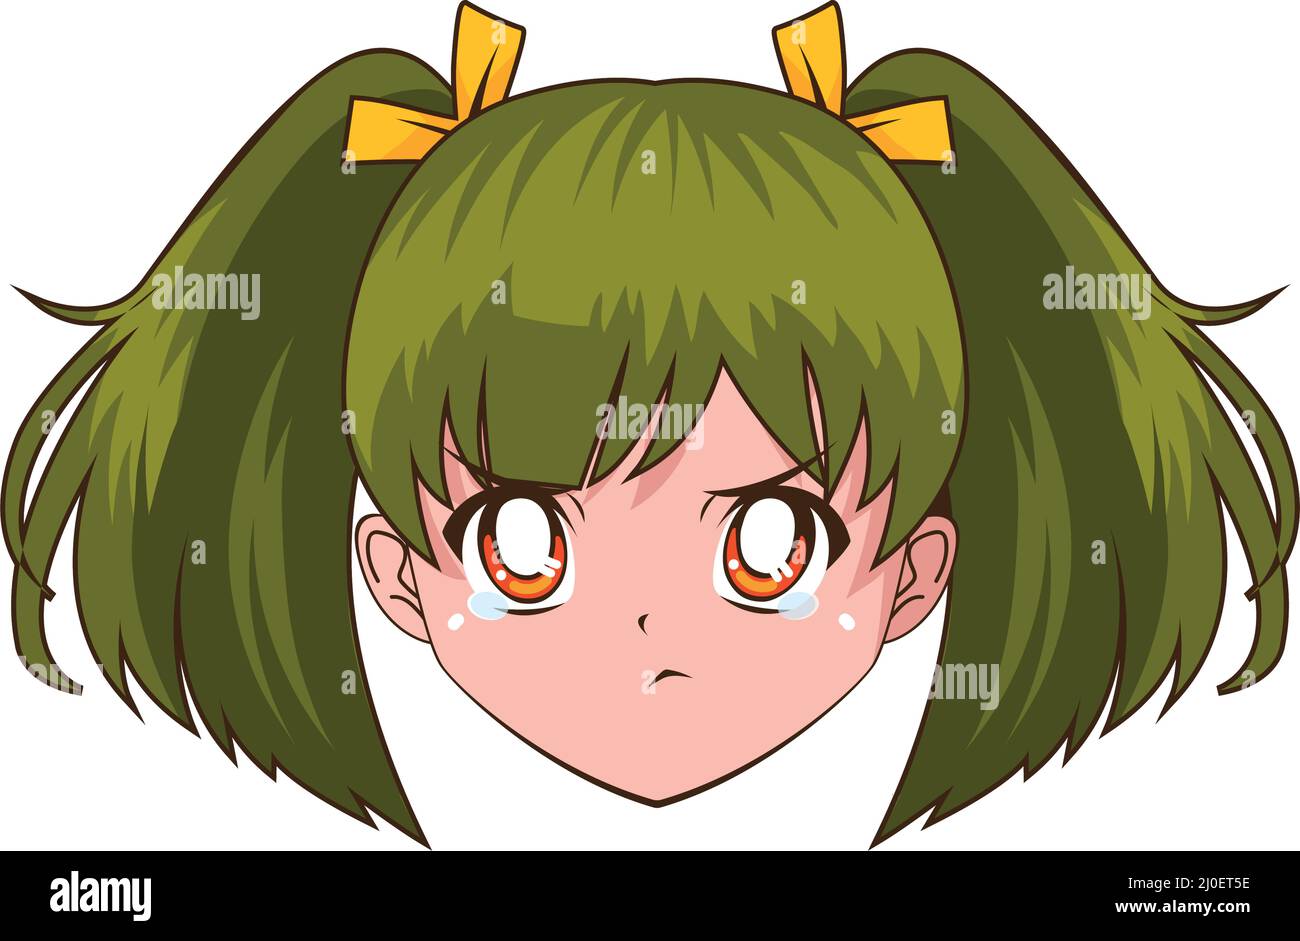 Me while angry | Angry anime face, Anime, Hd anime wallpapers-demhanvico.com.vn